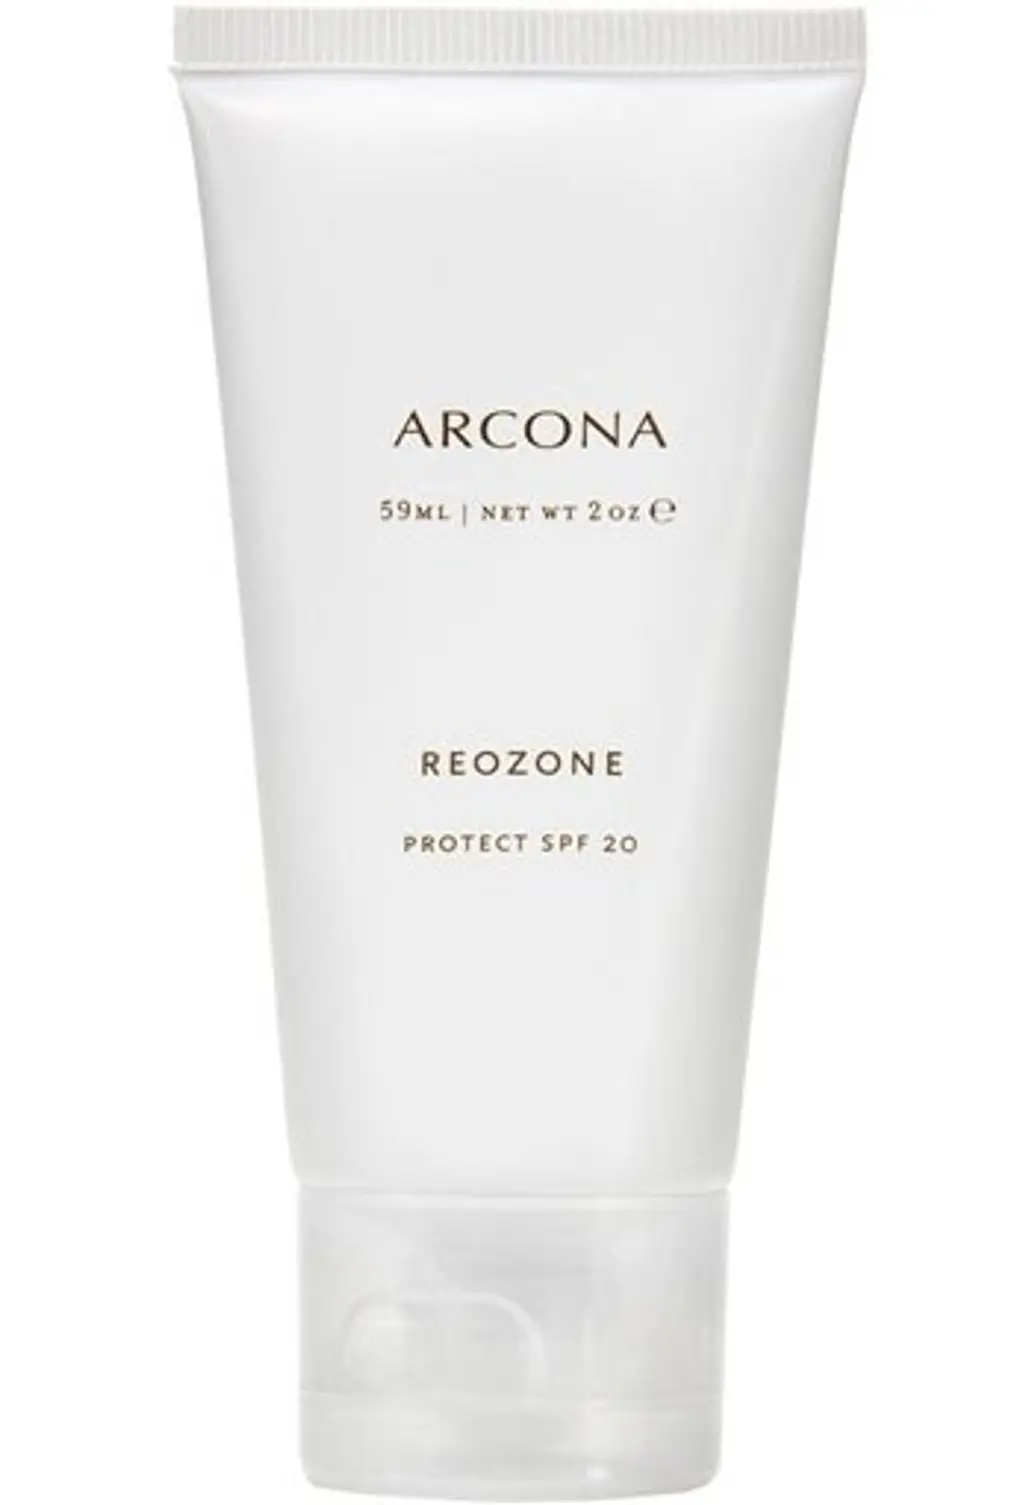 ARCONA Reozone, Protect SPF 20